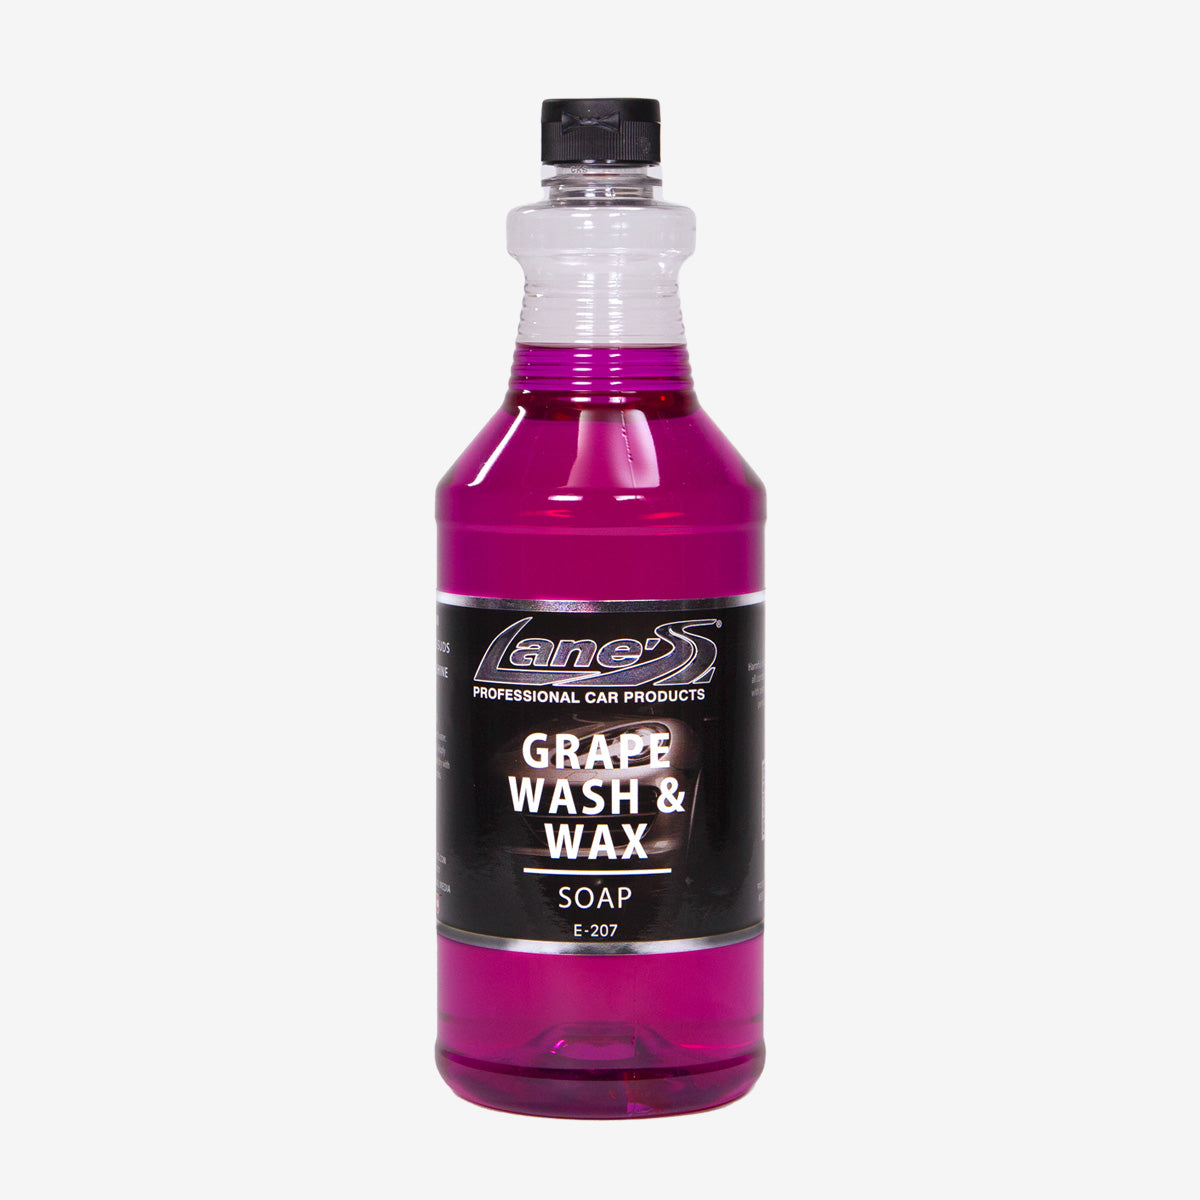 Grape Wash and Wax Soap